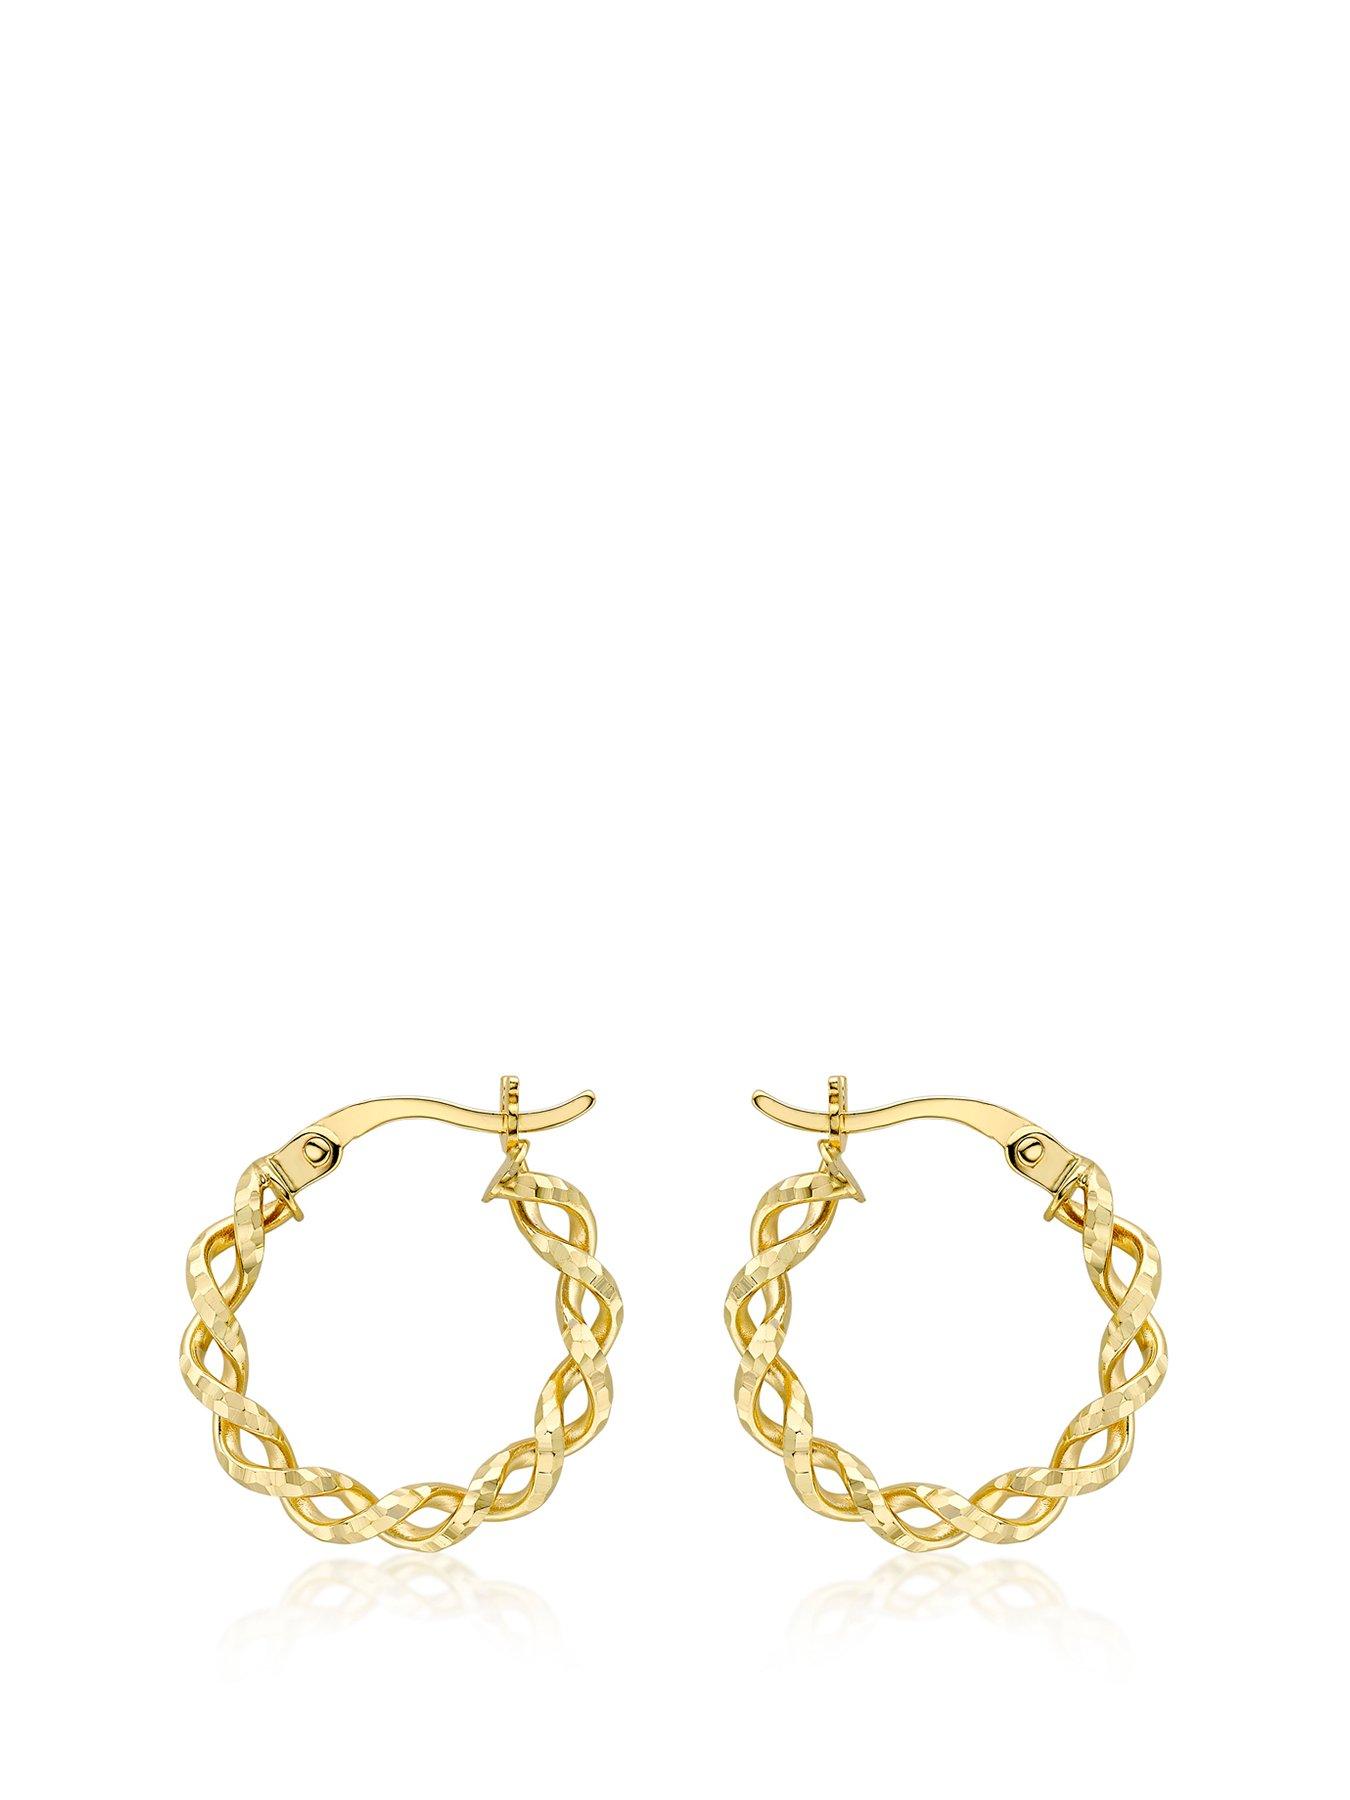 Details about   10K Yellow Gold Hoop Earrings Plain Oblong Polished Hoops 17.5mm Drop 